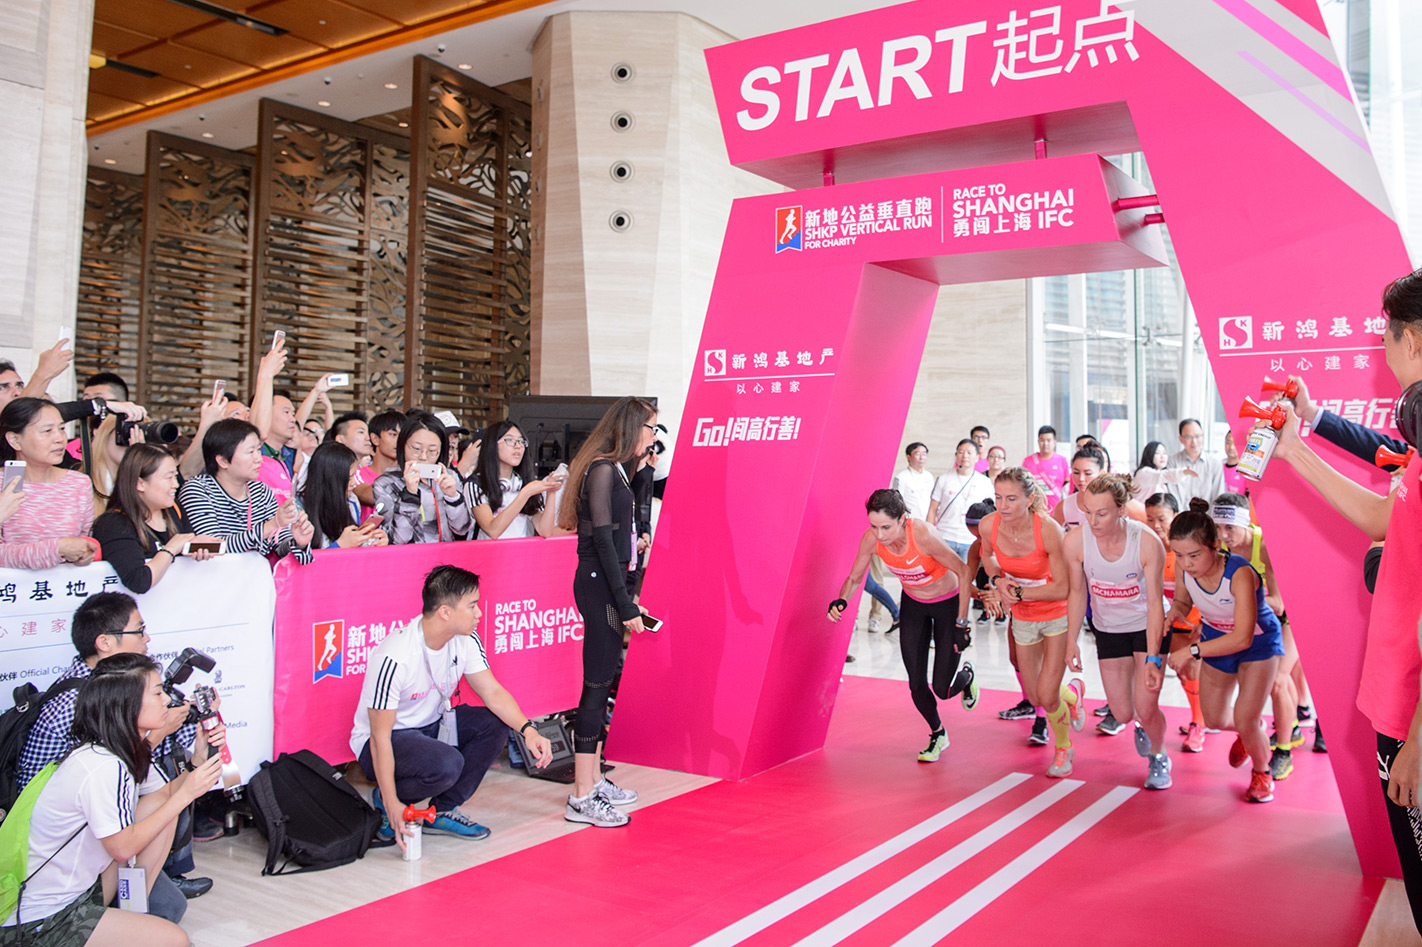 SHKP Vertical Run for Charity - Race to Shanghai IFC race start. ©Sporting Republic